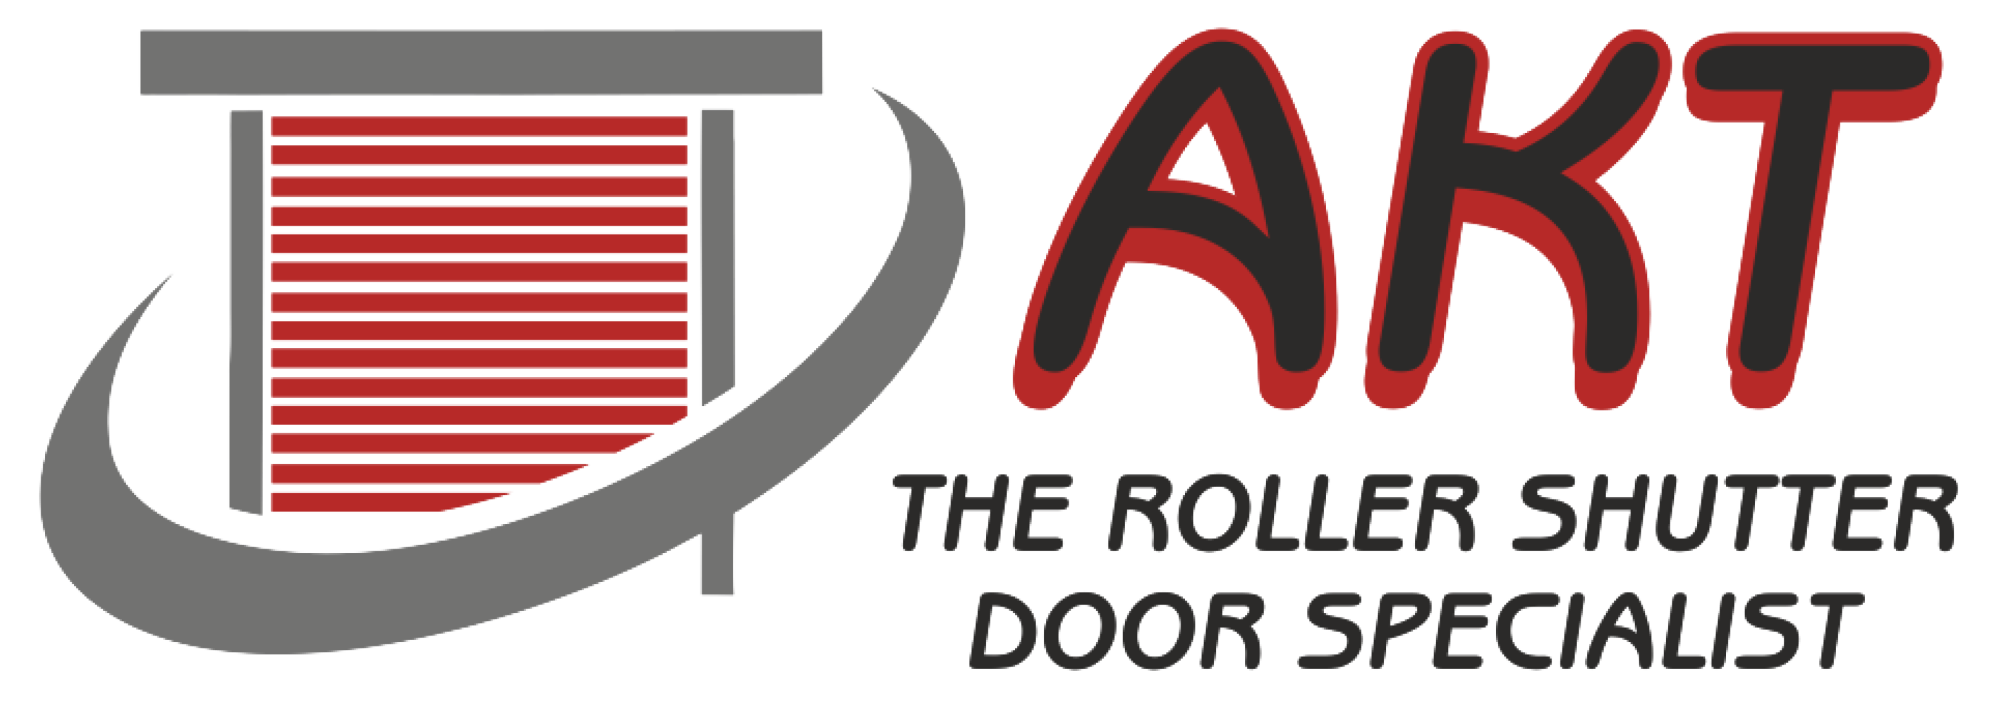 Akt Roller Shutters Ltd Logo